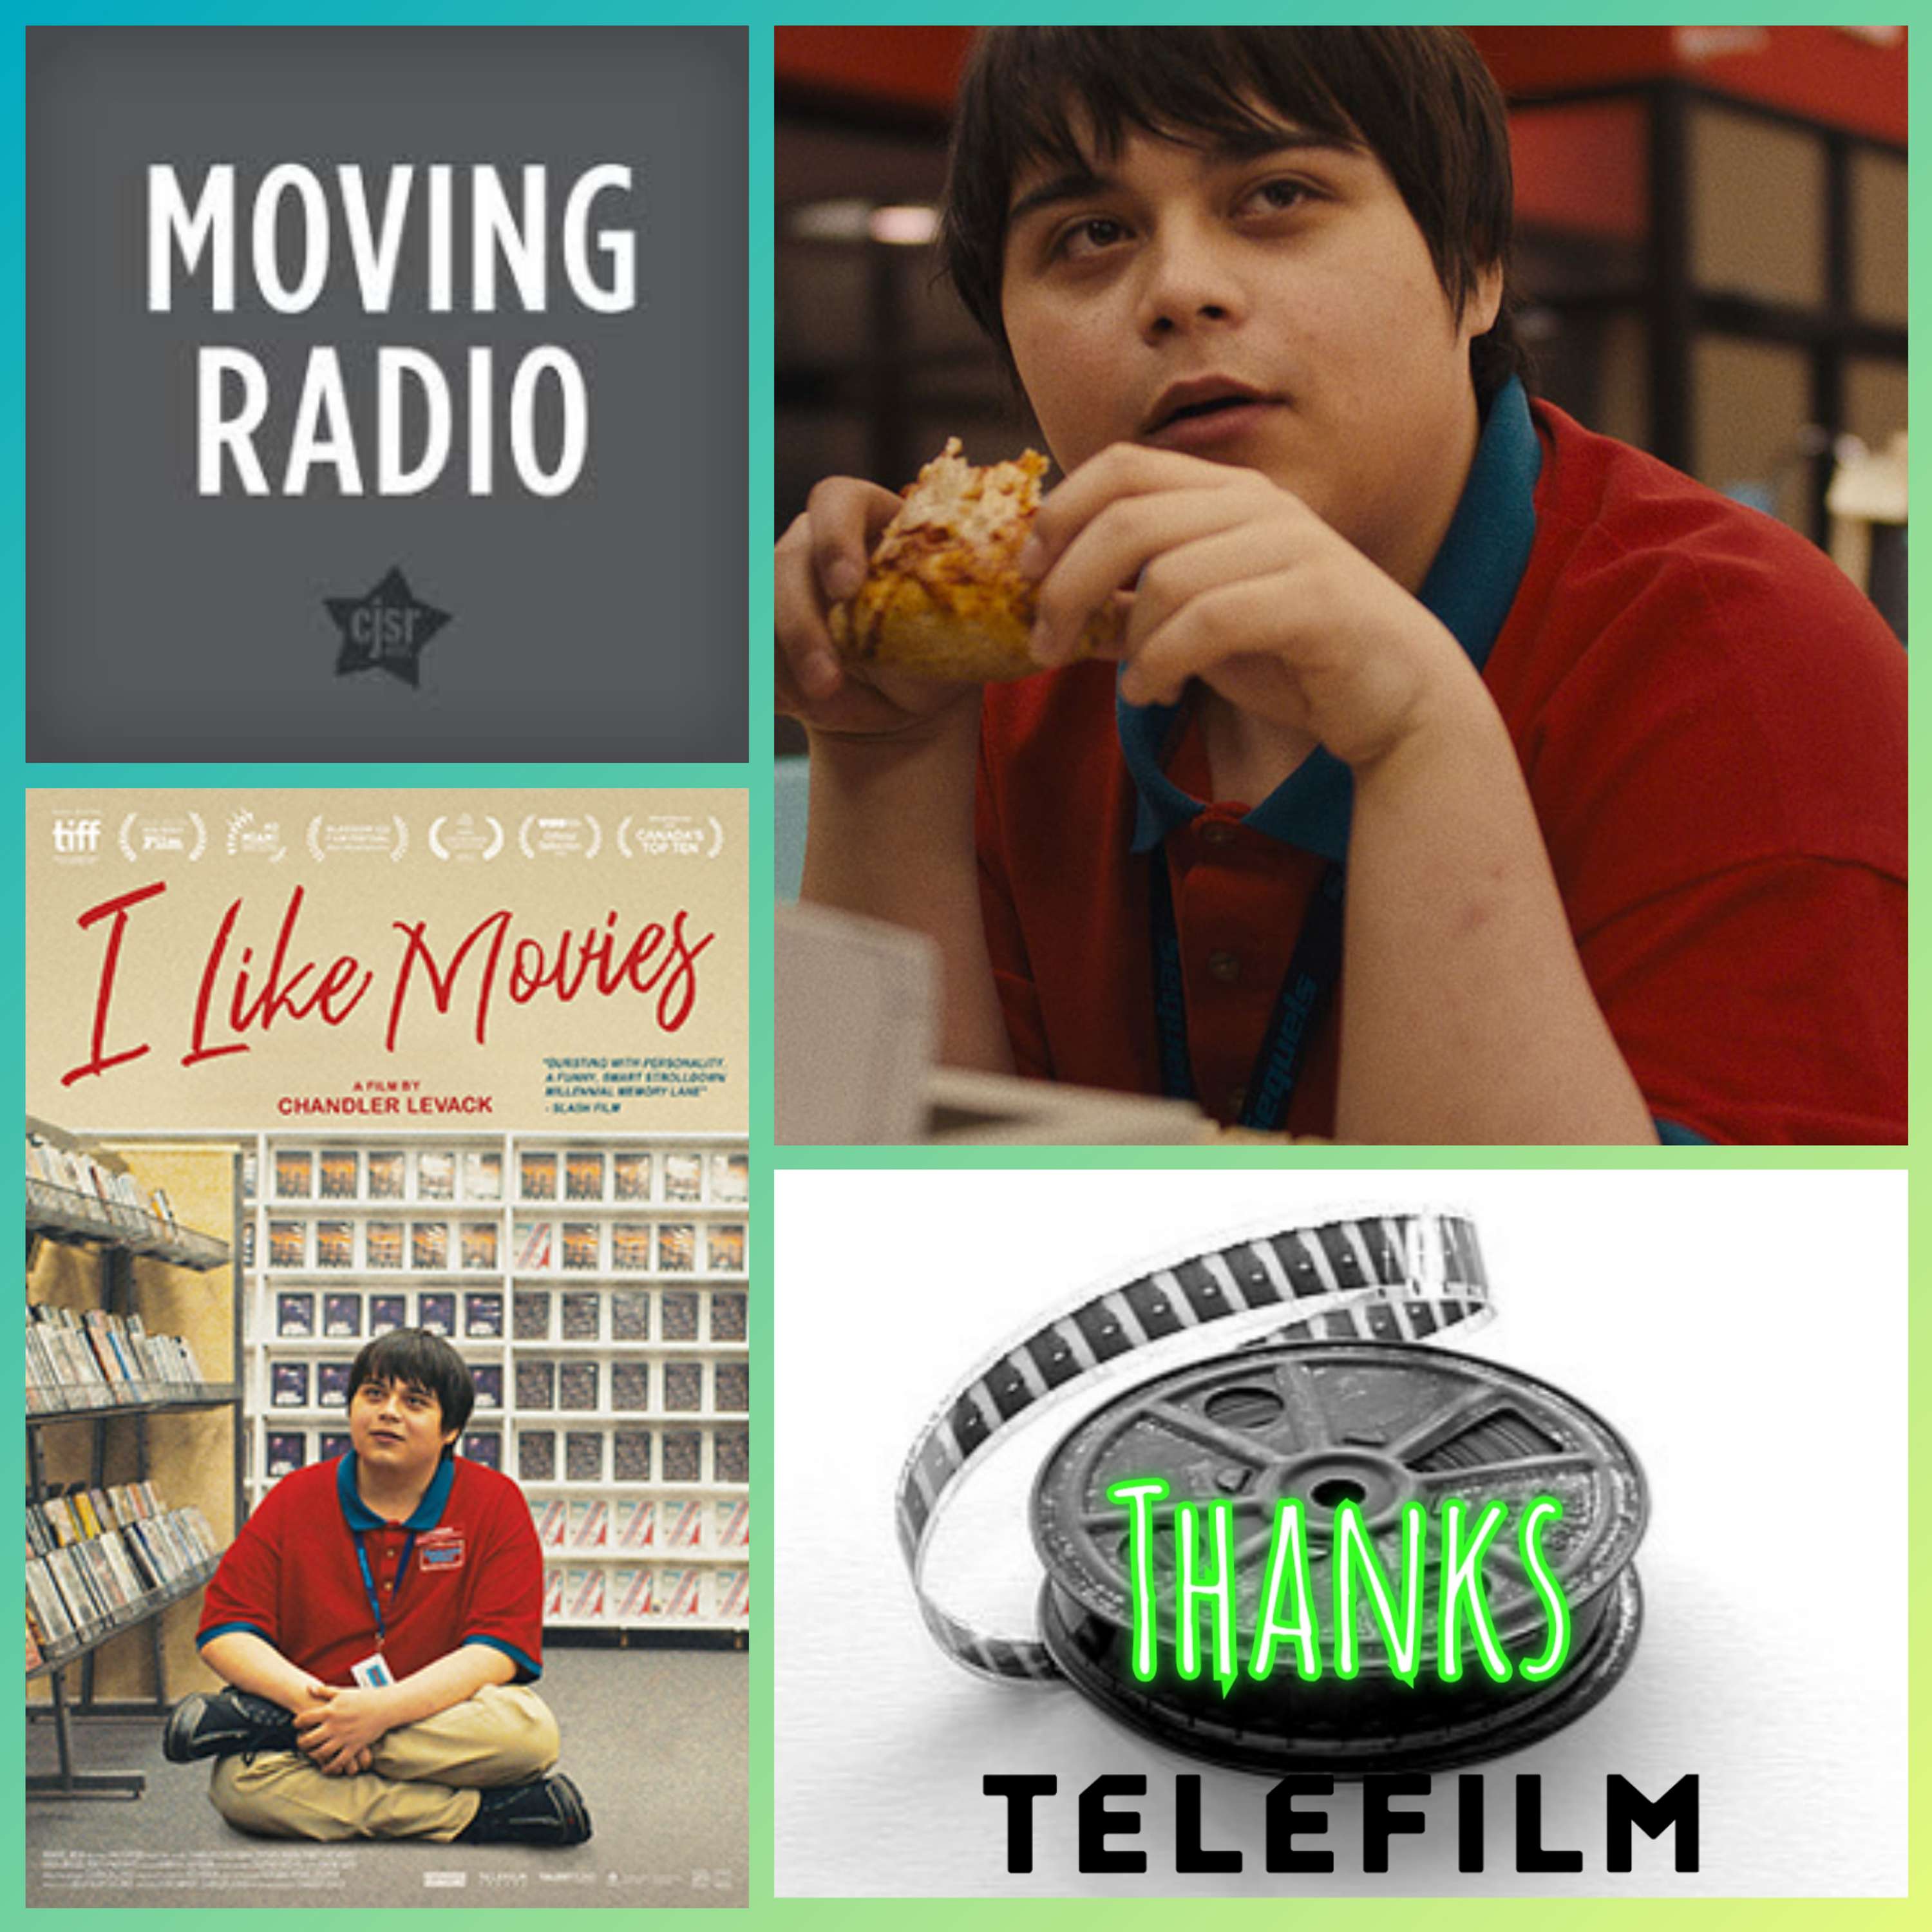 Thanks Telefilm - I LOVE MOVIES by Chandler Levack